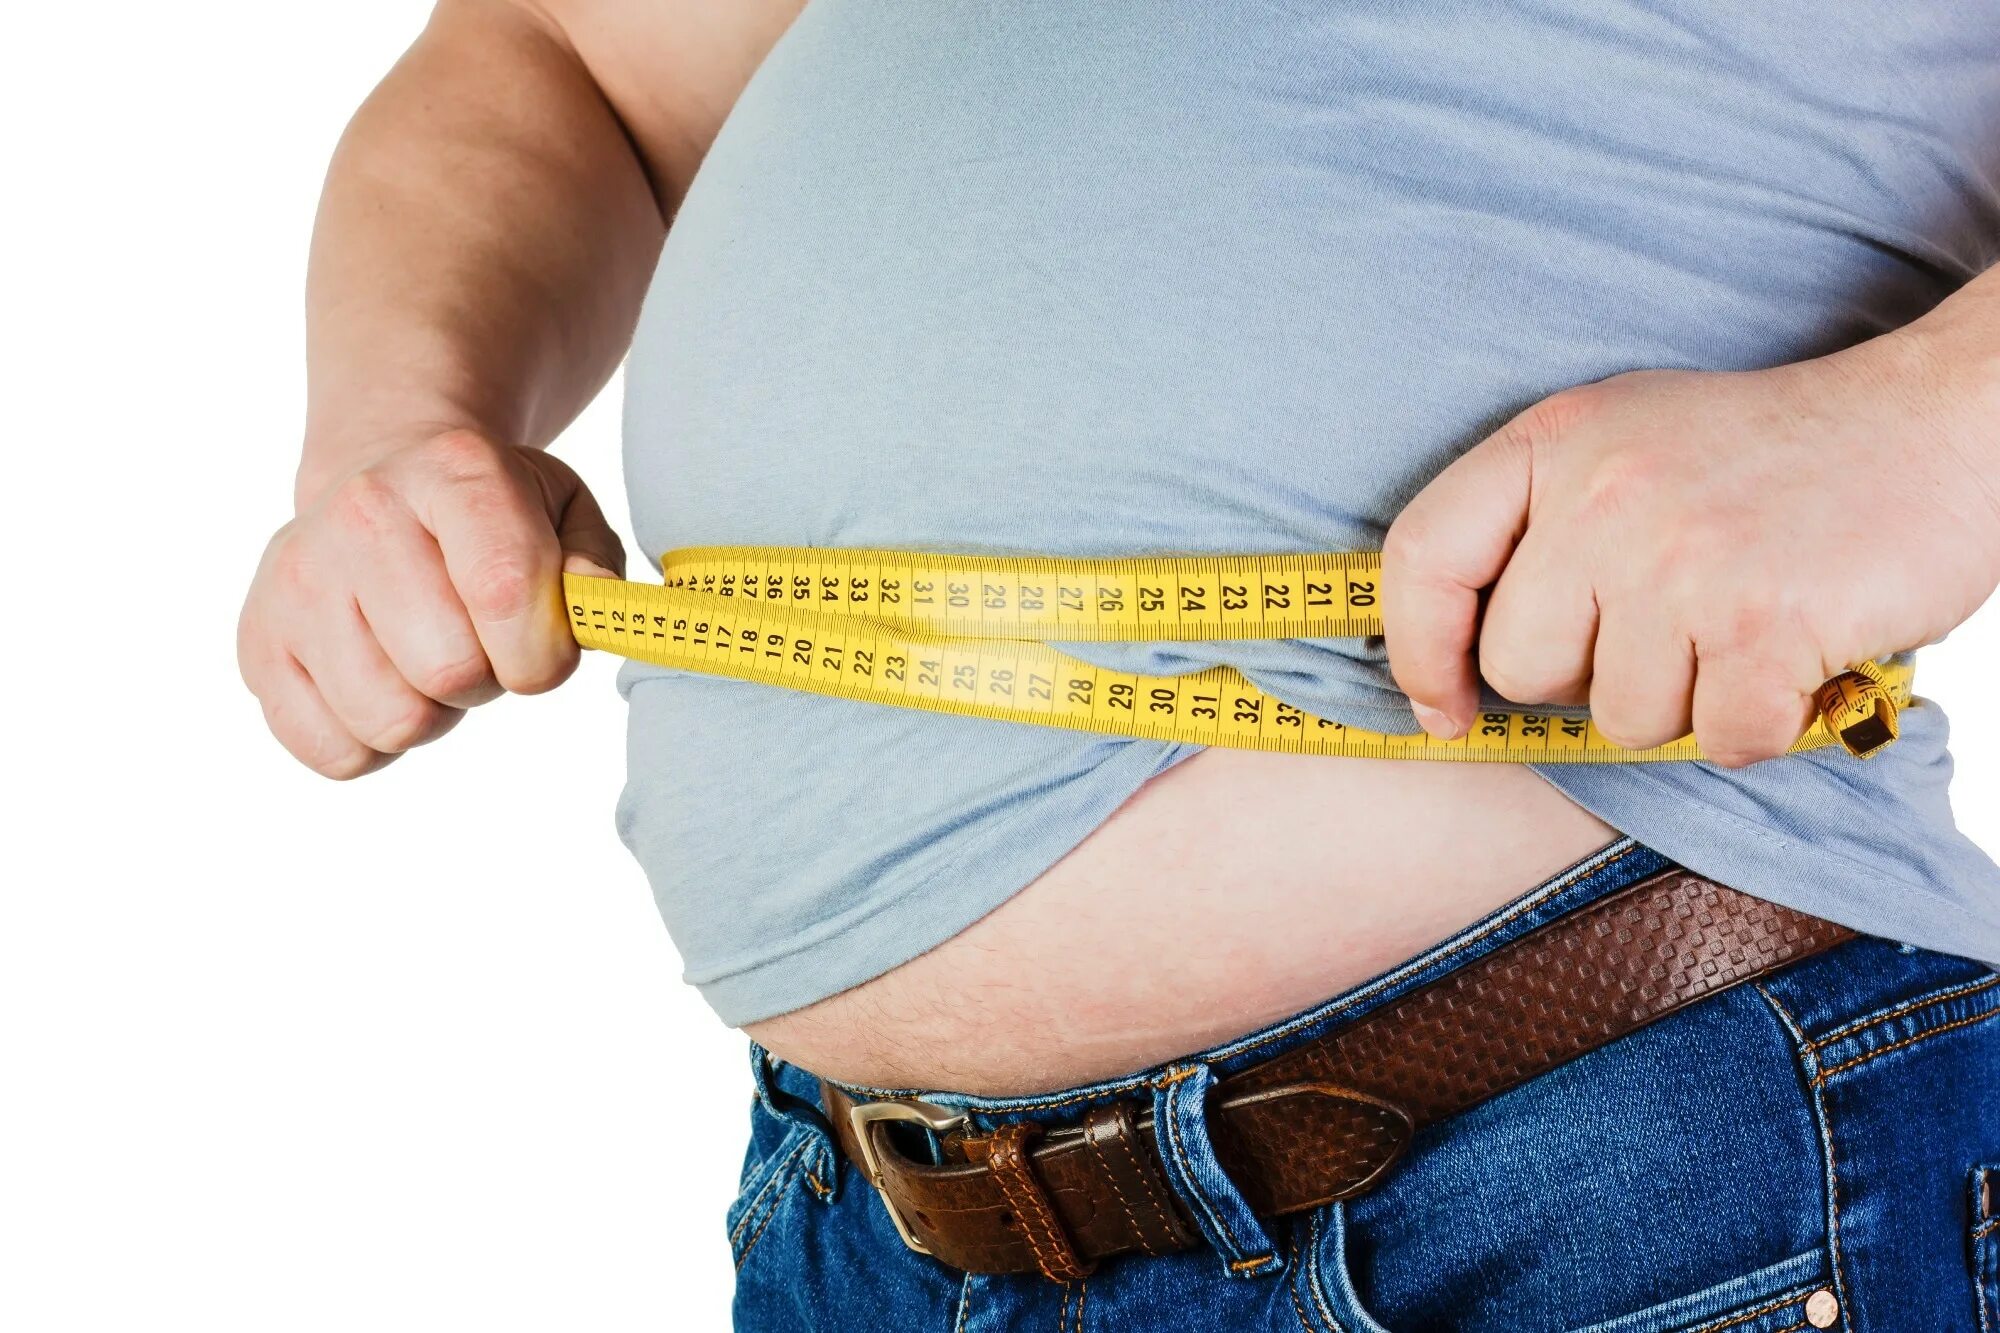 Measuring obesity. Man measuring Weight. Толстушка держит живот. Держи живот в голоде